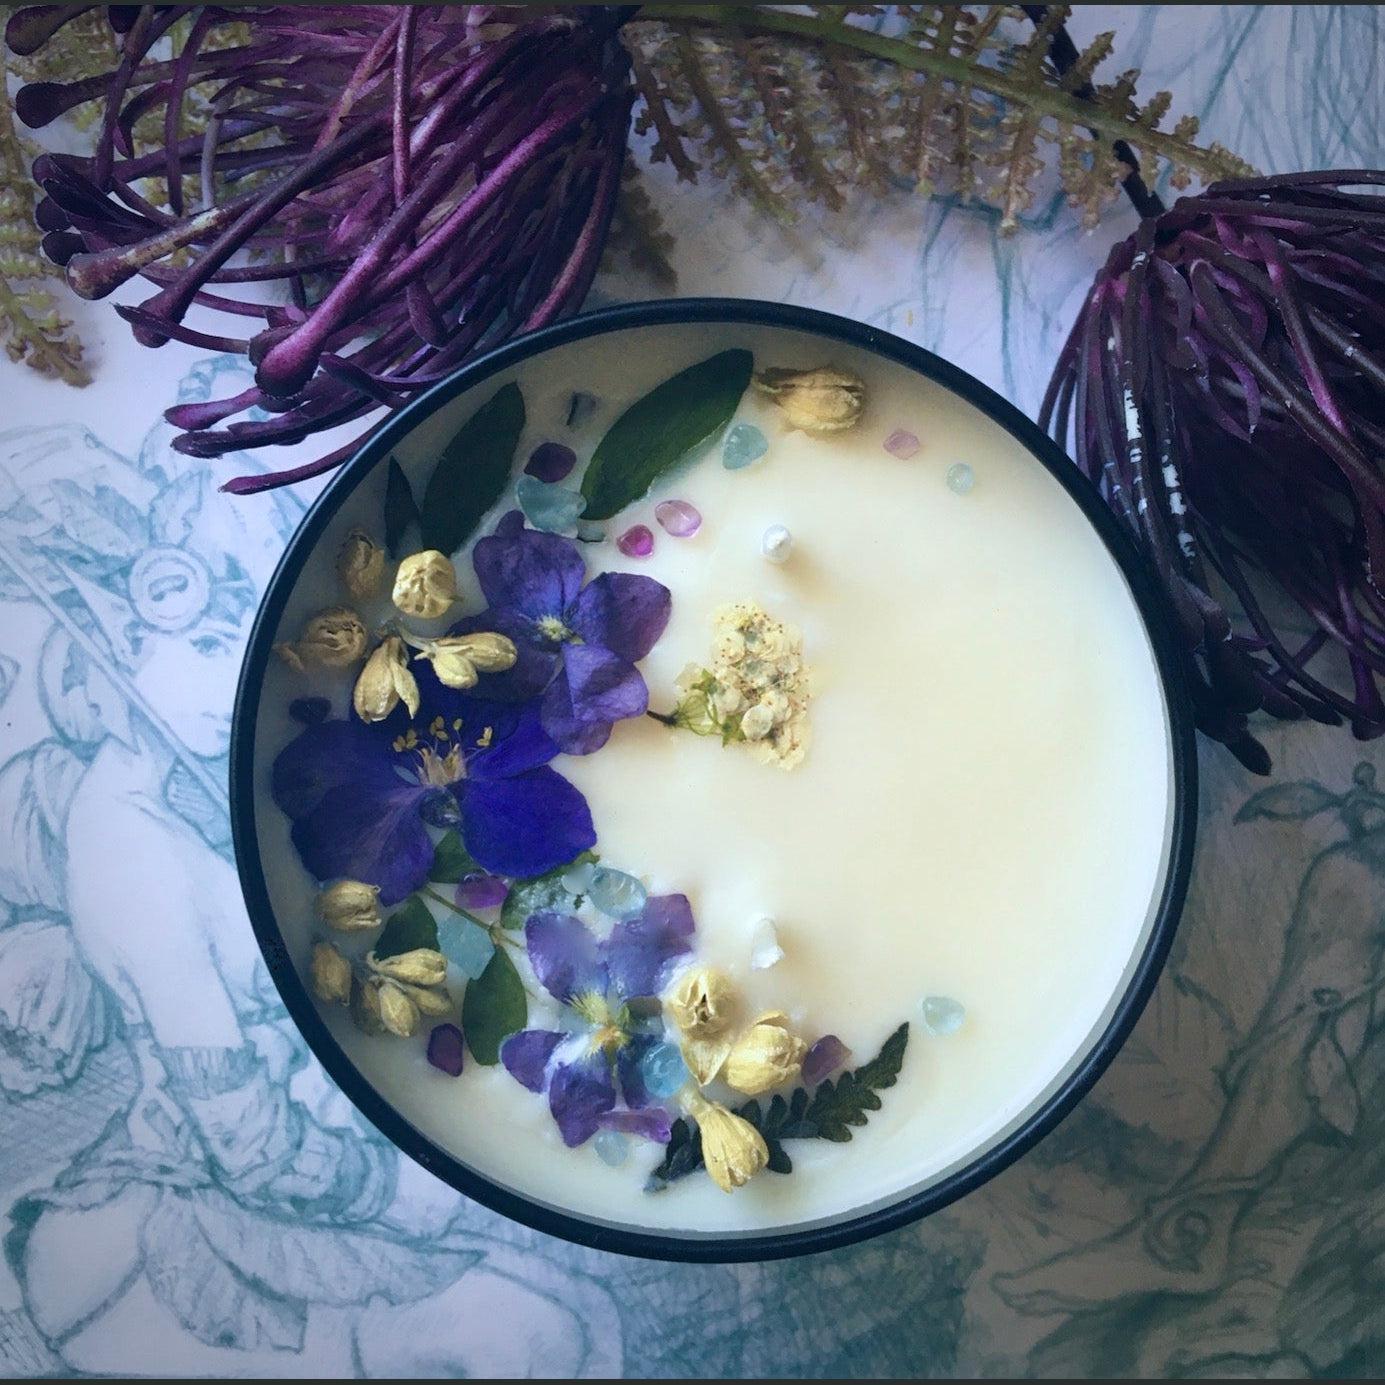 Jasmine &amp; Violet Botanical Candle, Botanical Collection - SugarMuses